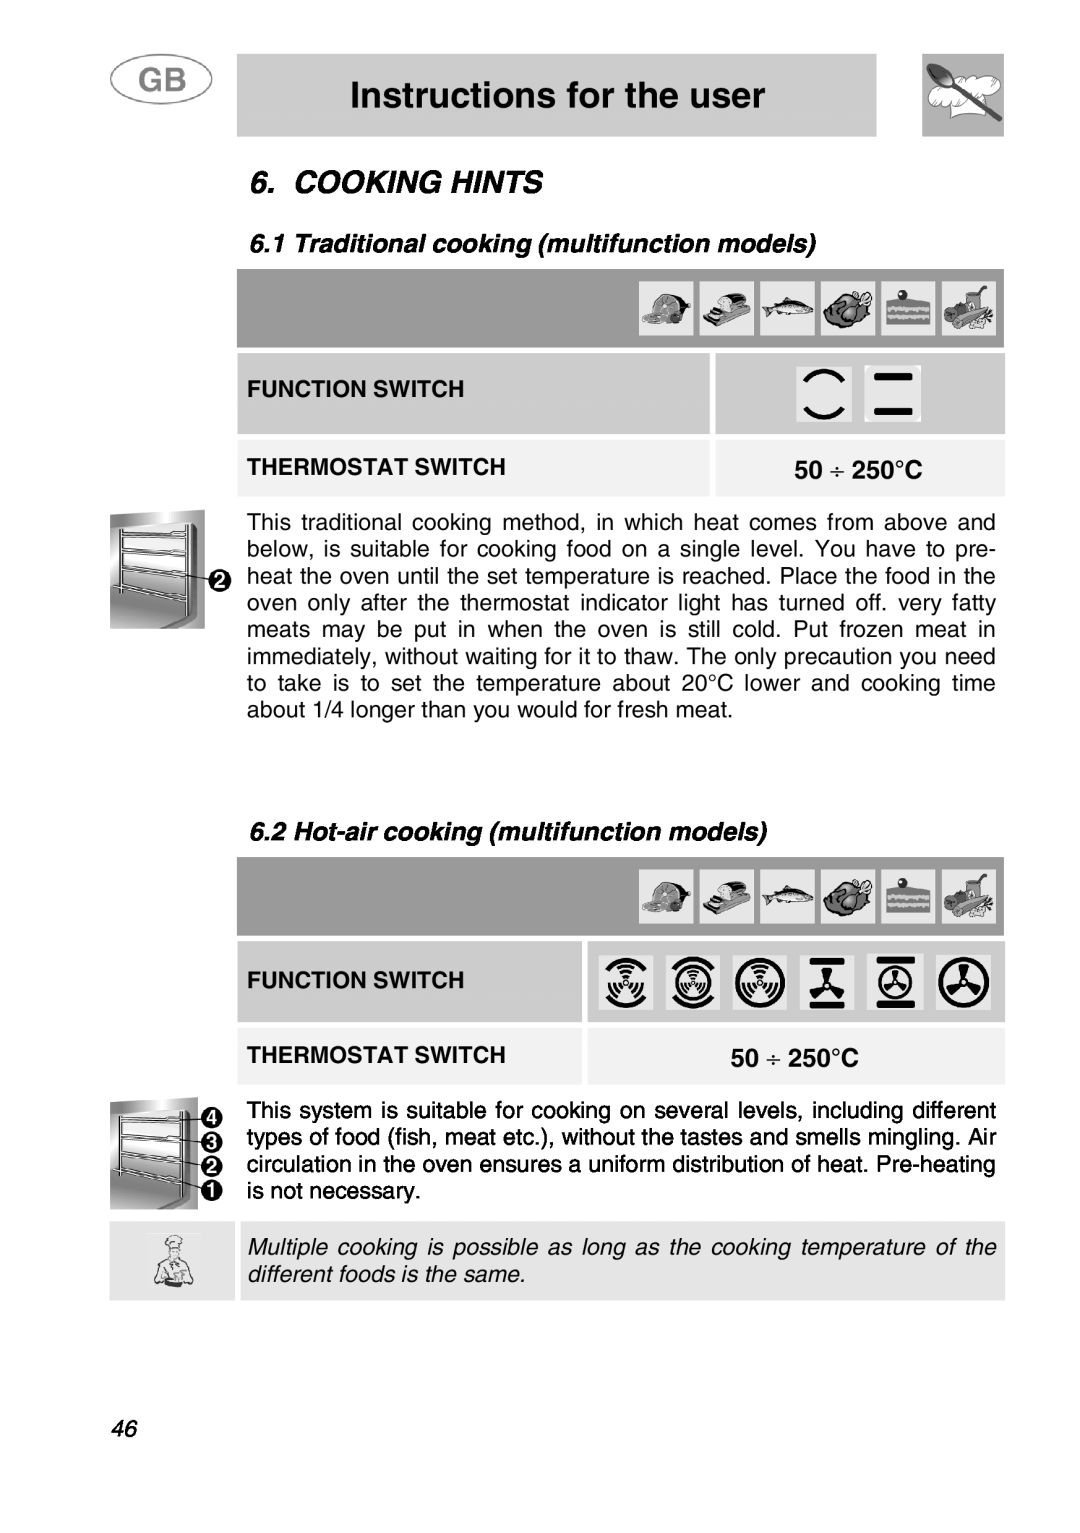 Smeg SA280X Cooking Hints, 6.1Traditional cooking multifunction models, 50 ⎟ 250C, 6.2Hot-air cooking multifunction models 